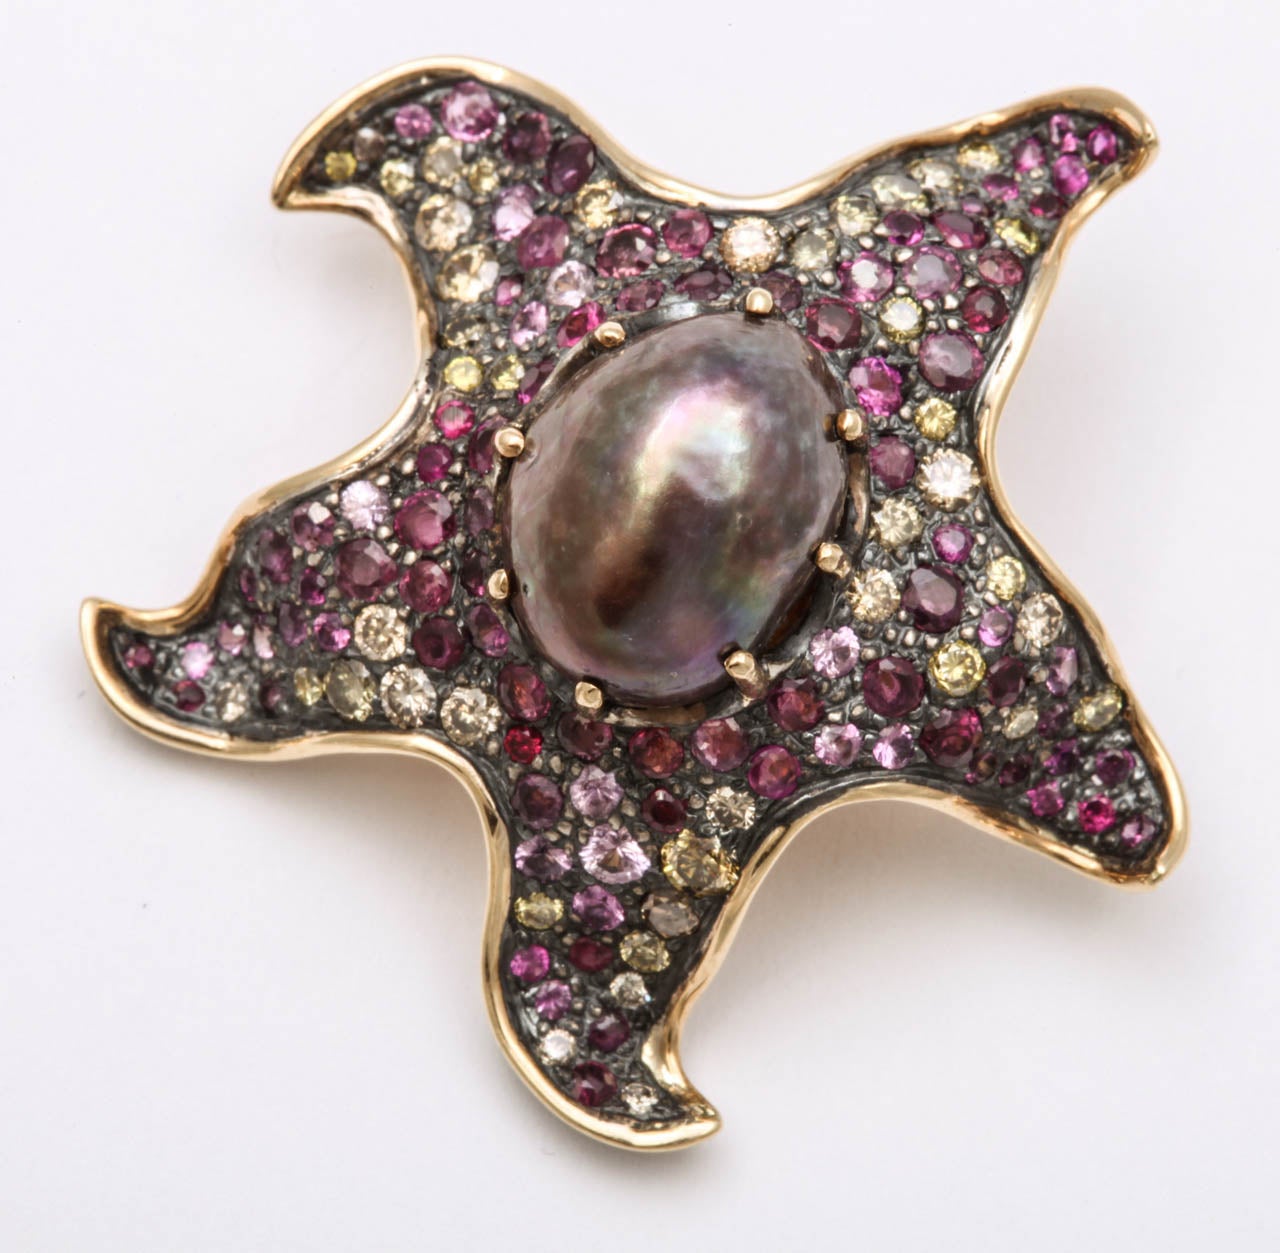 Star Fish Clip on Earrings by Marilyn Cooperman 3